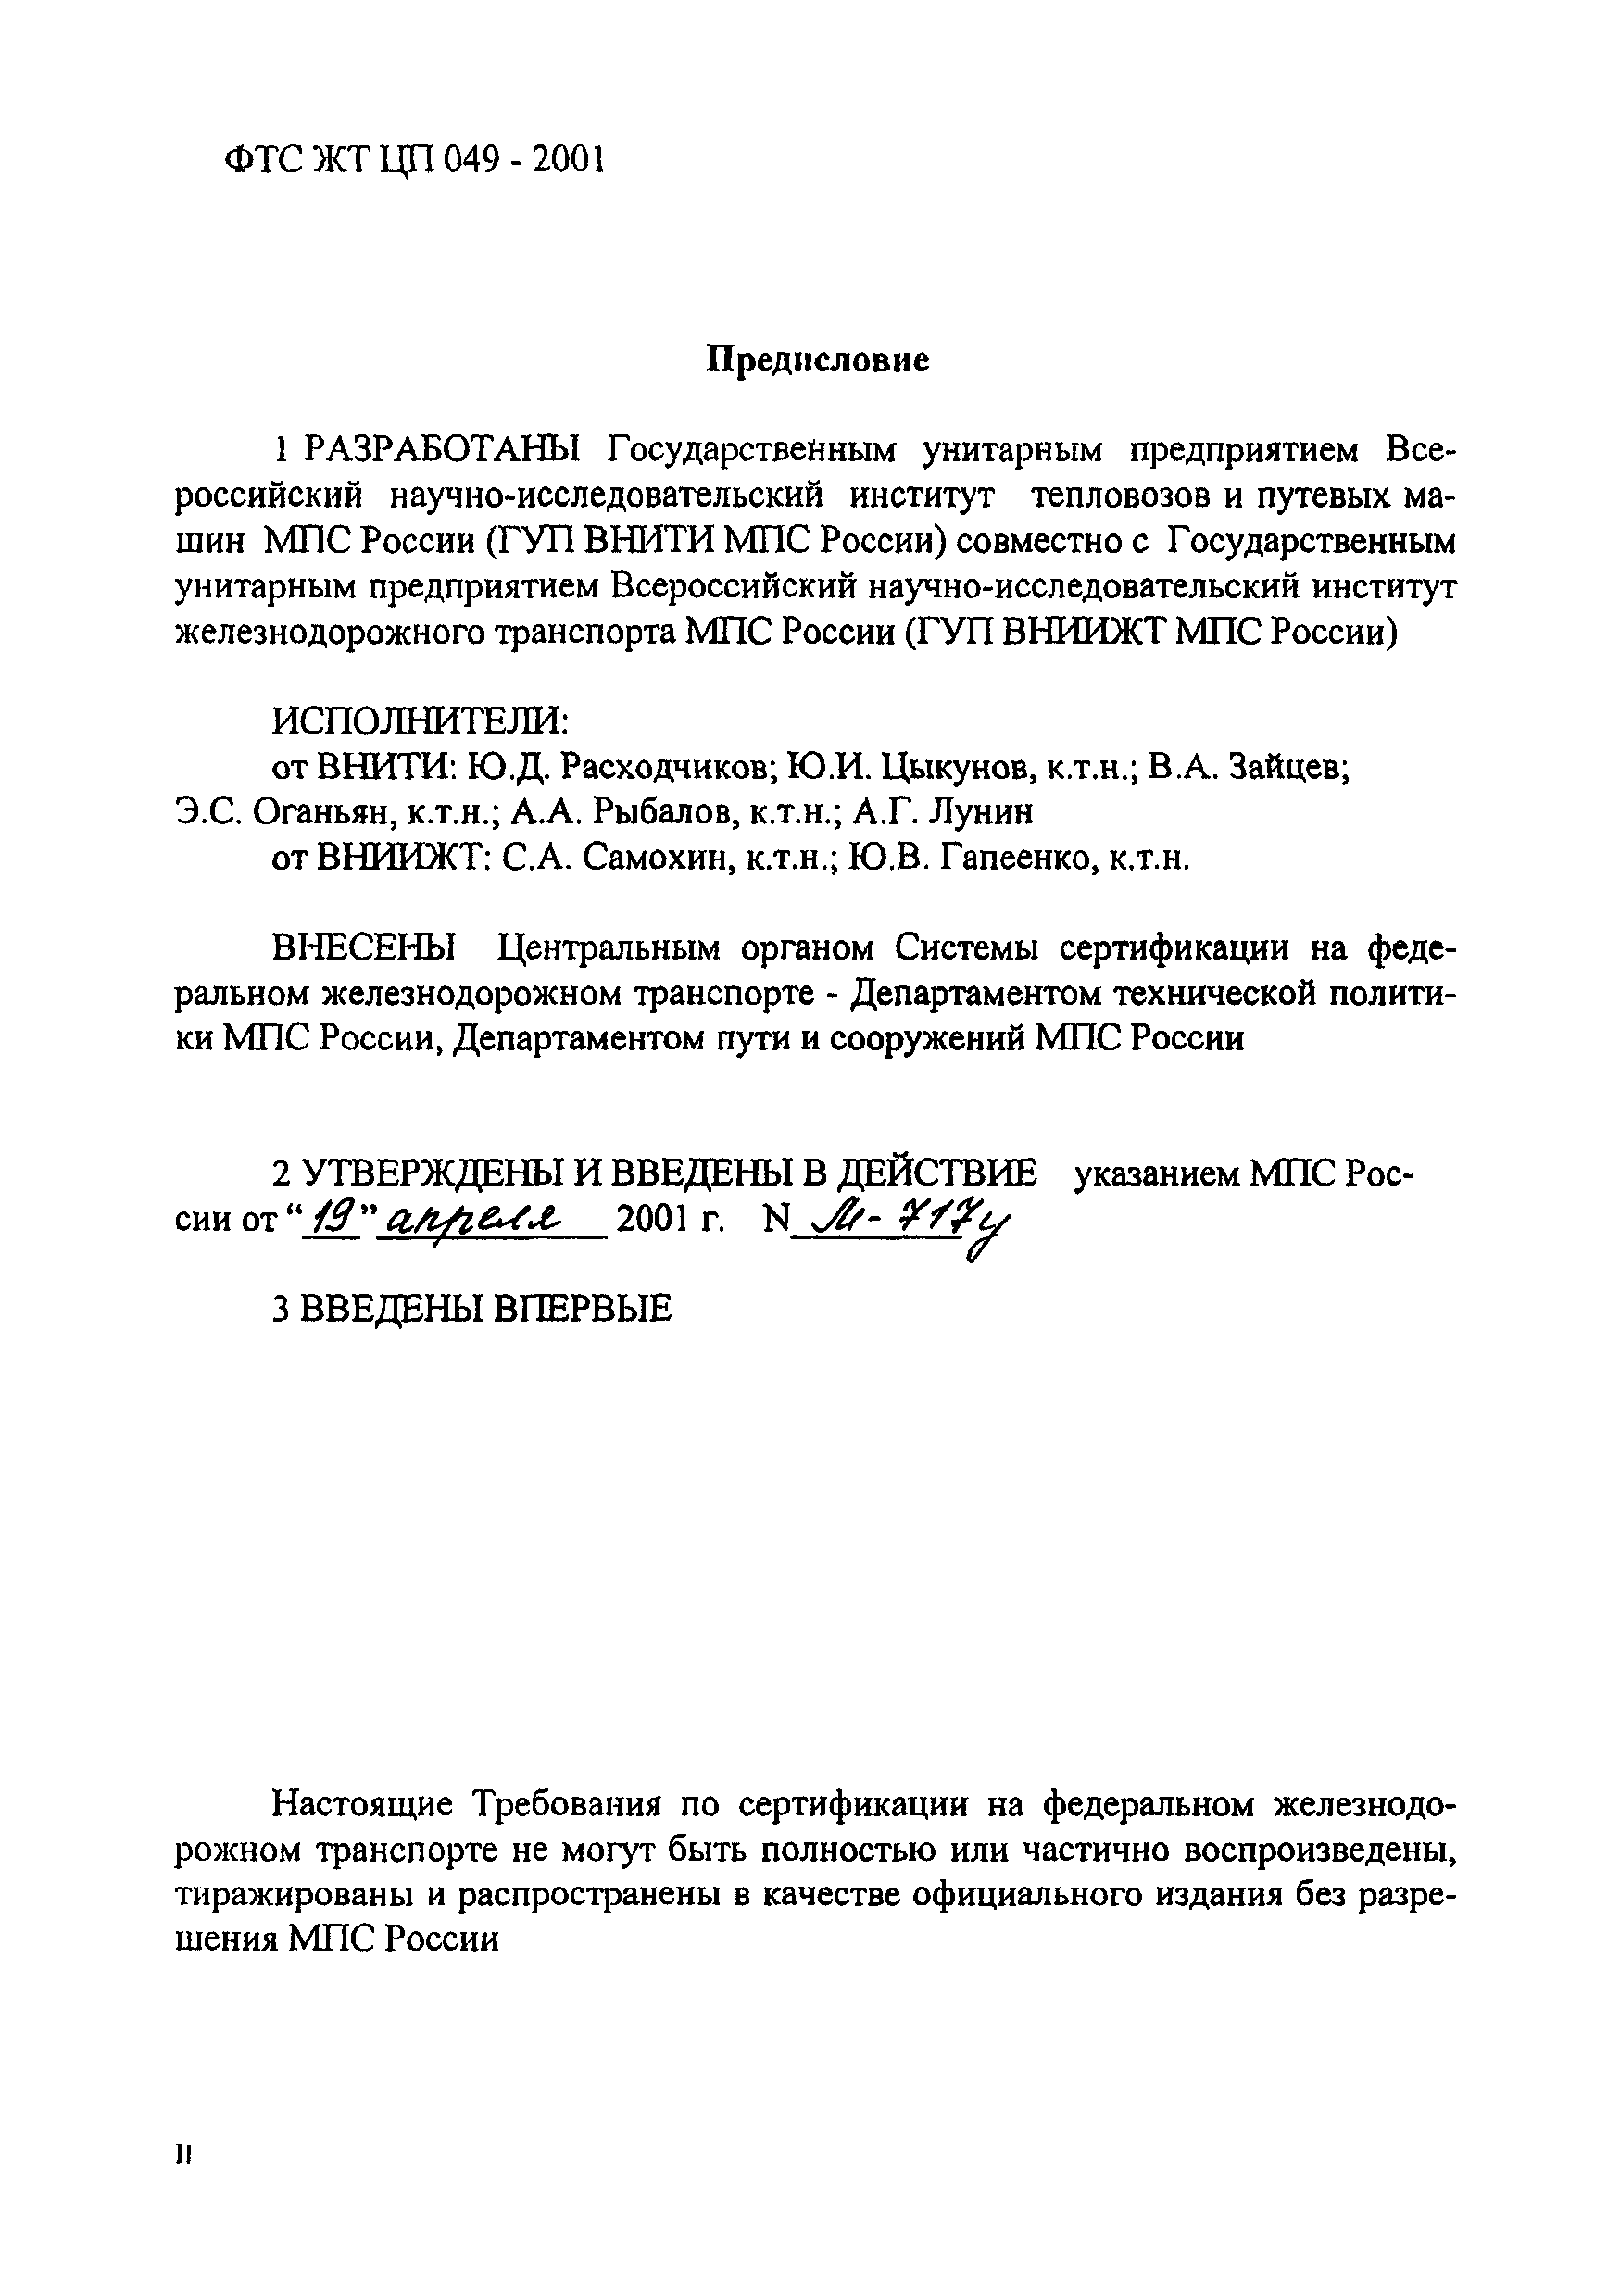 ФТС ЖТ ЦП 049-2001